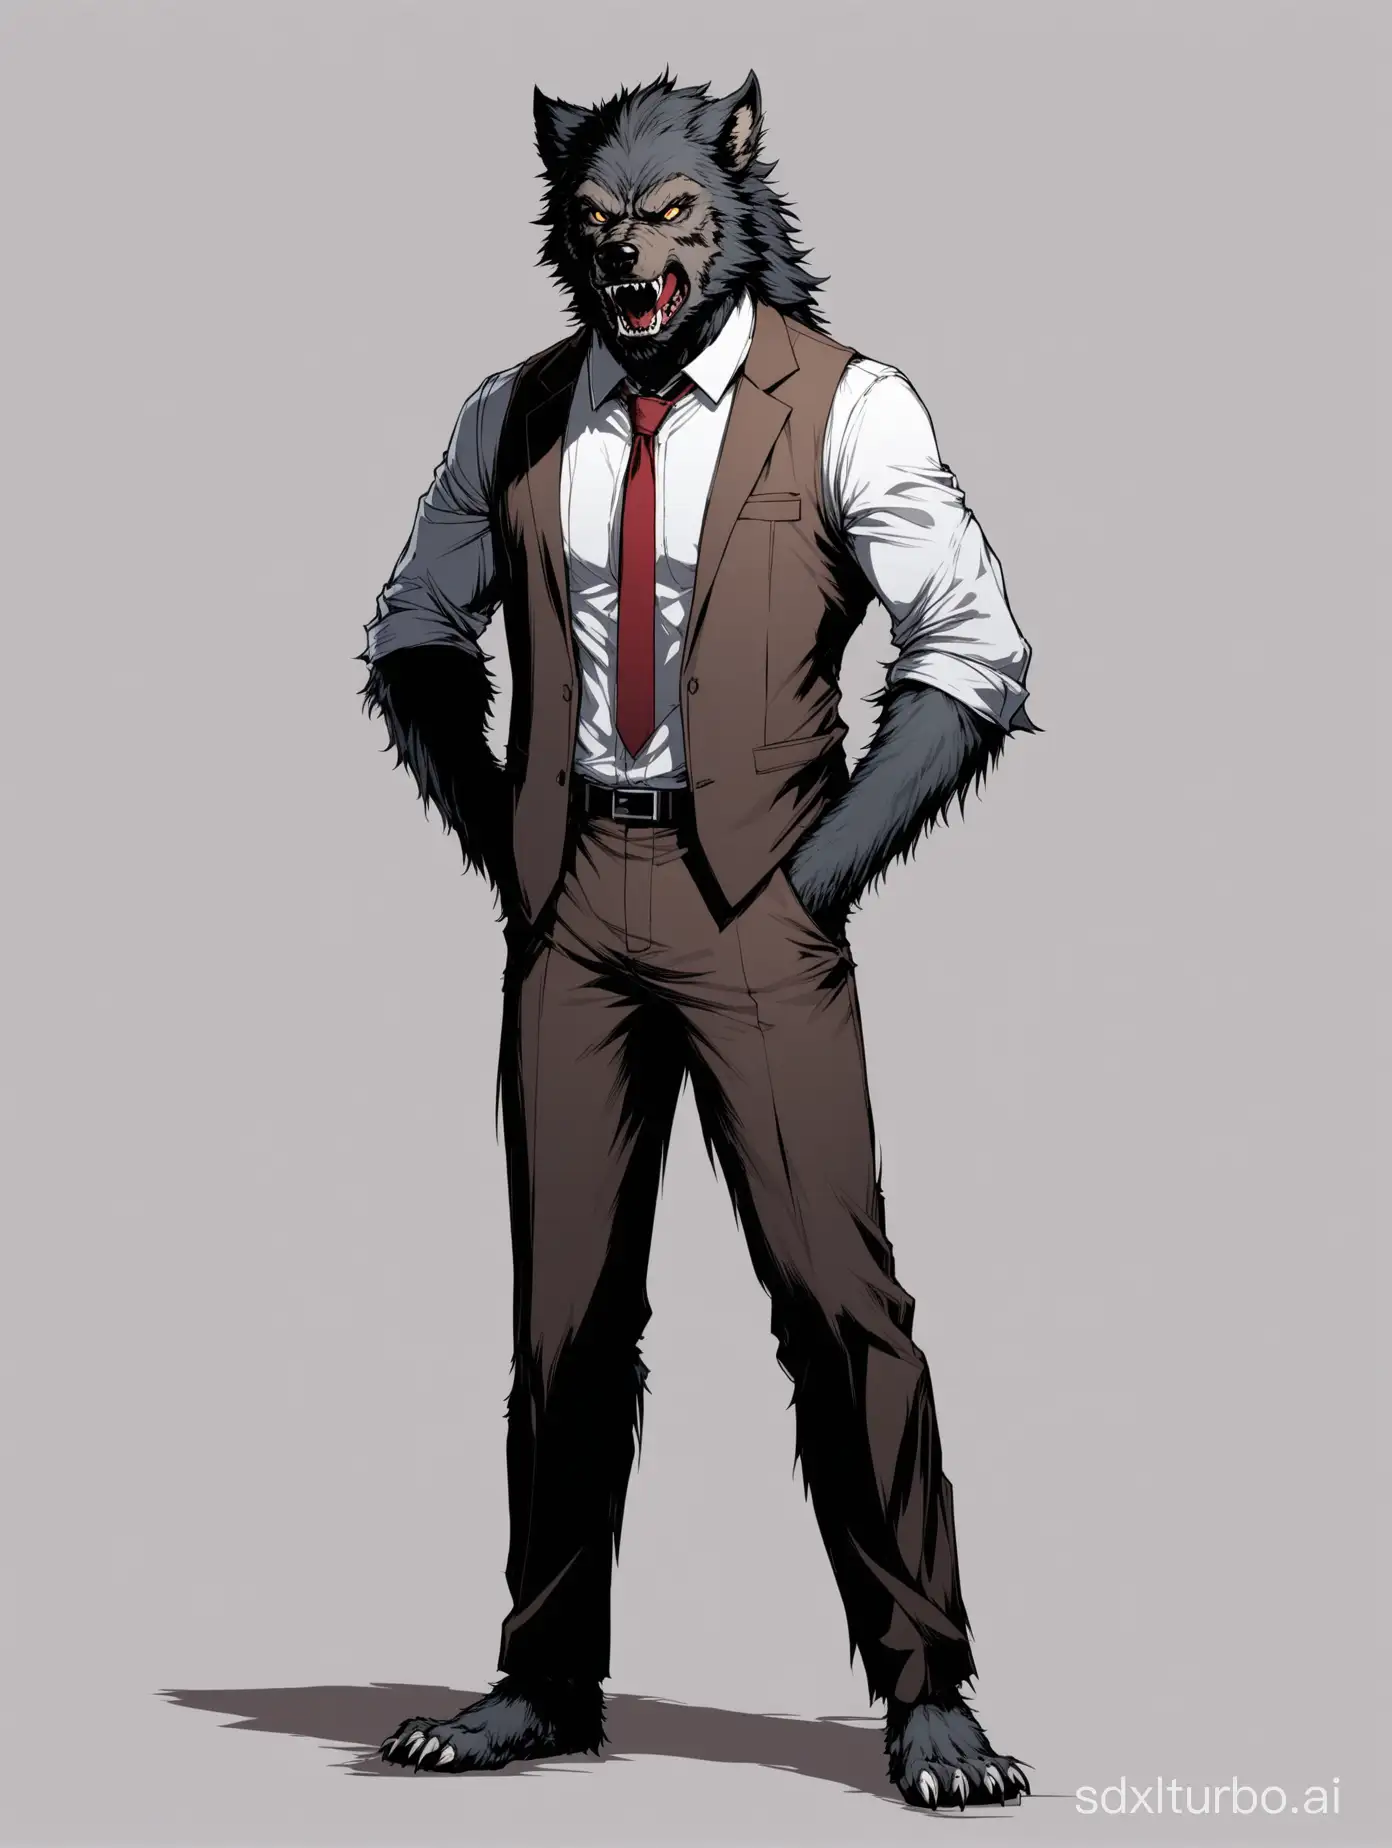 Werewolf office worker standing against a blank background